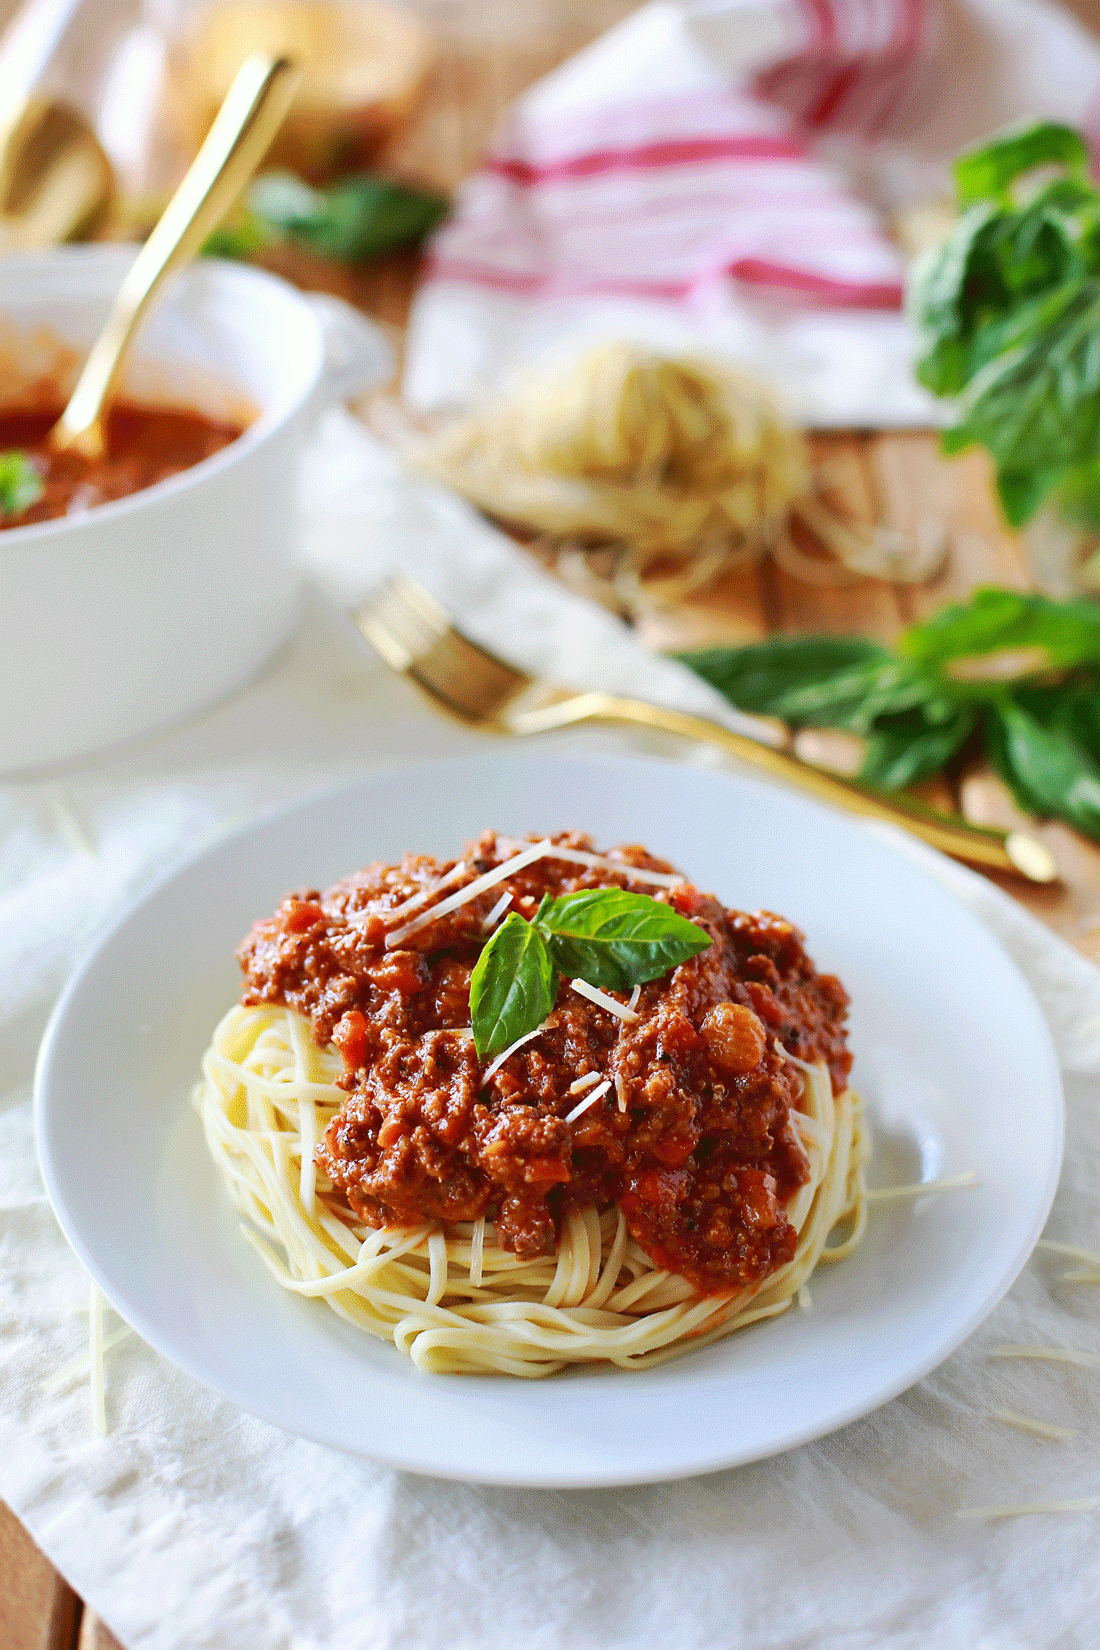 How To Make Good Spaghetti With Ragu Sauce